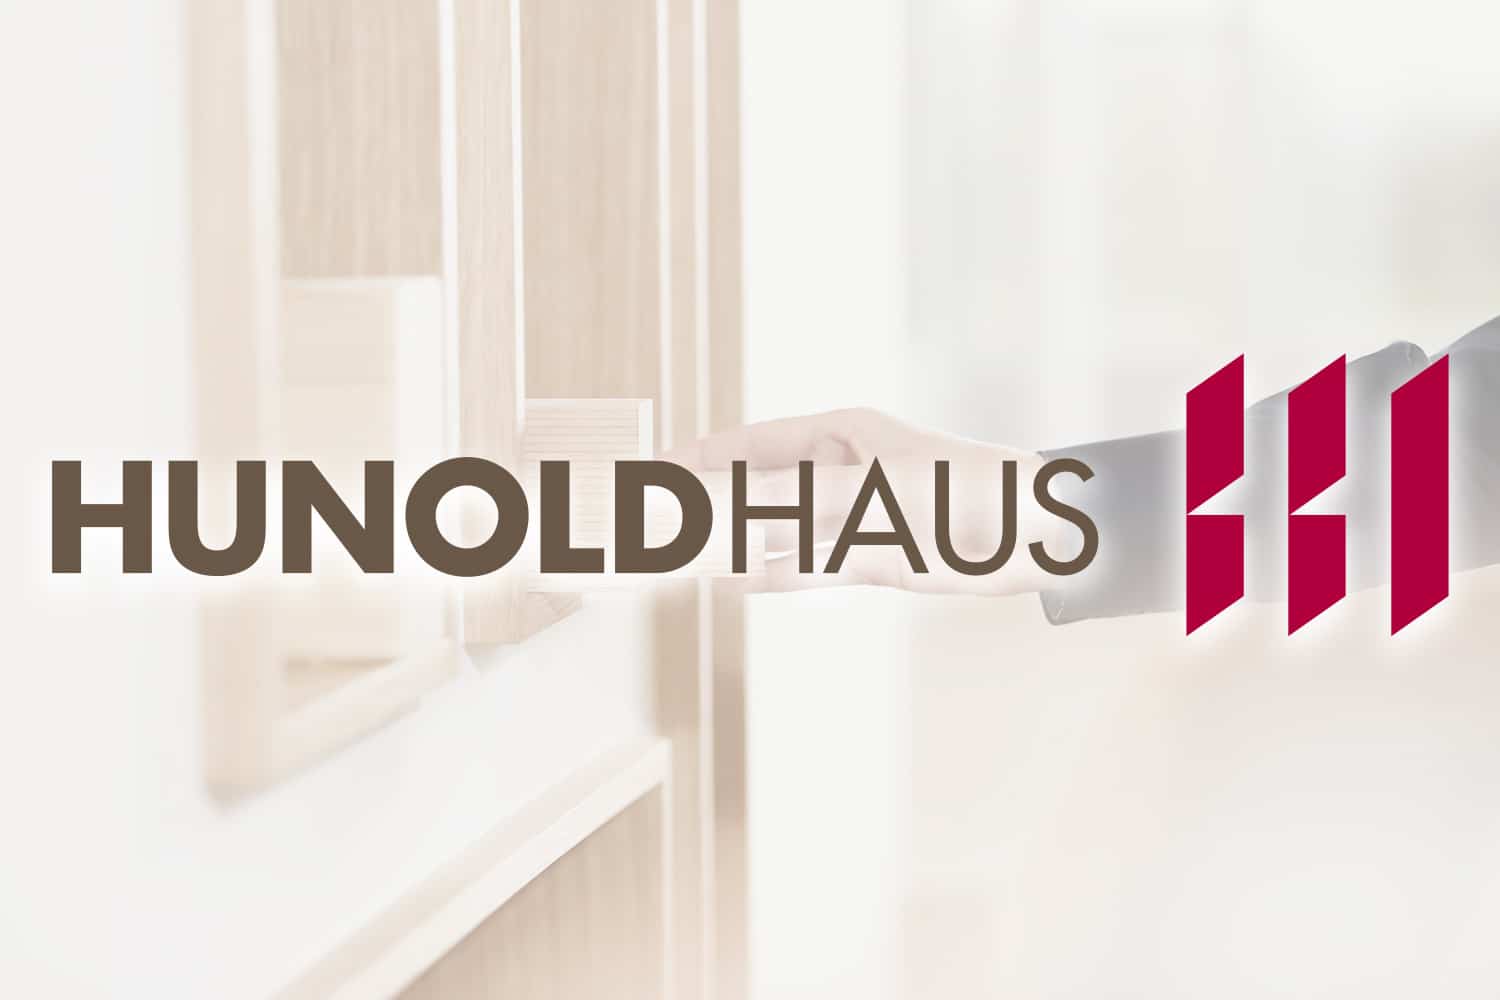 Hunoldhaus Webanwendung Flyer Drucksachen Geschäftsausstattung Digital Signage Touchbildschirm Showroom